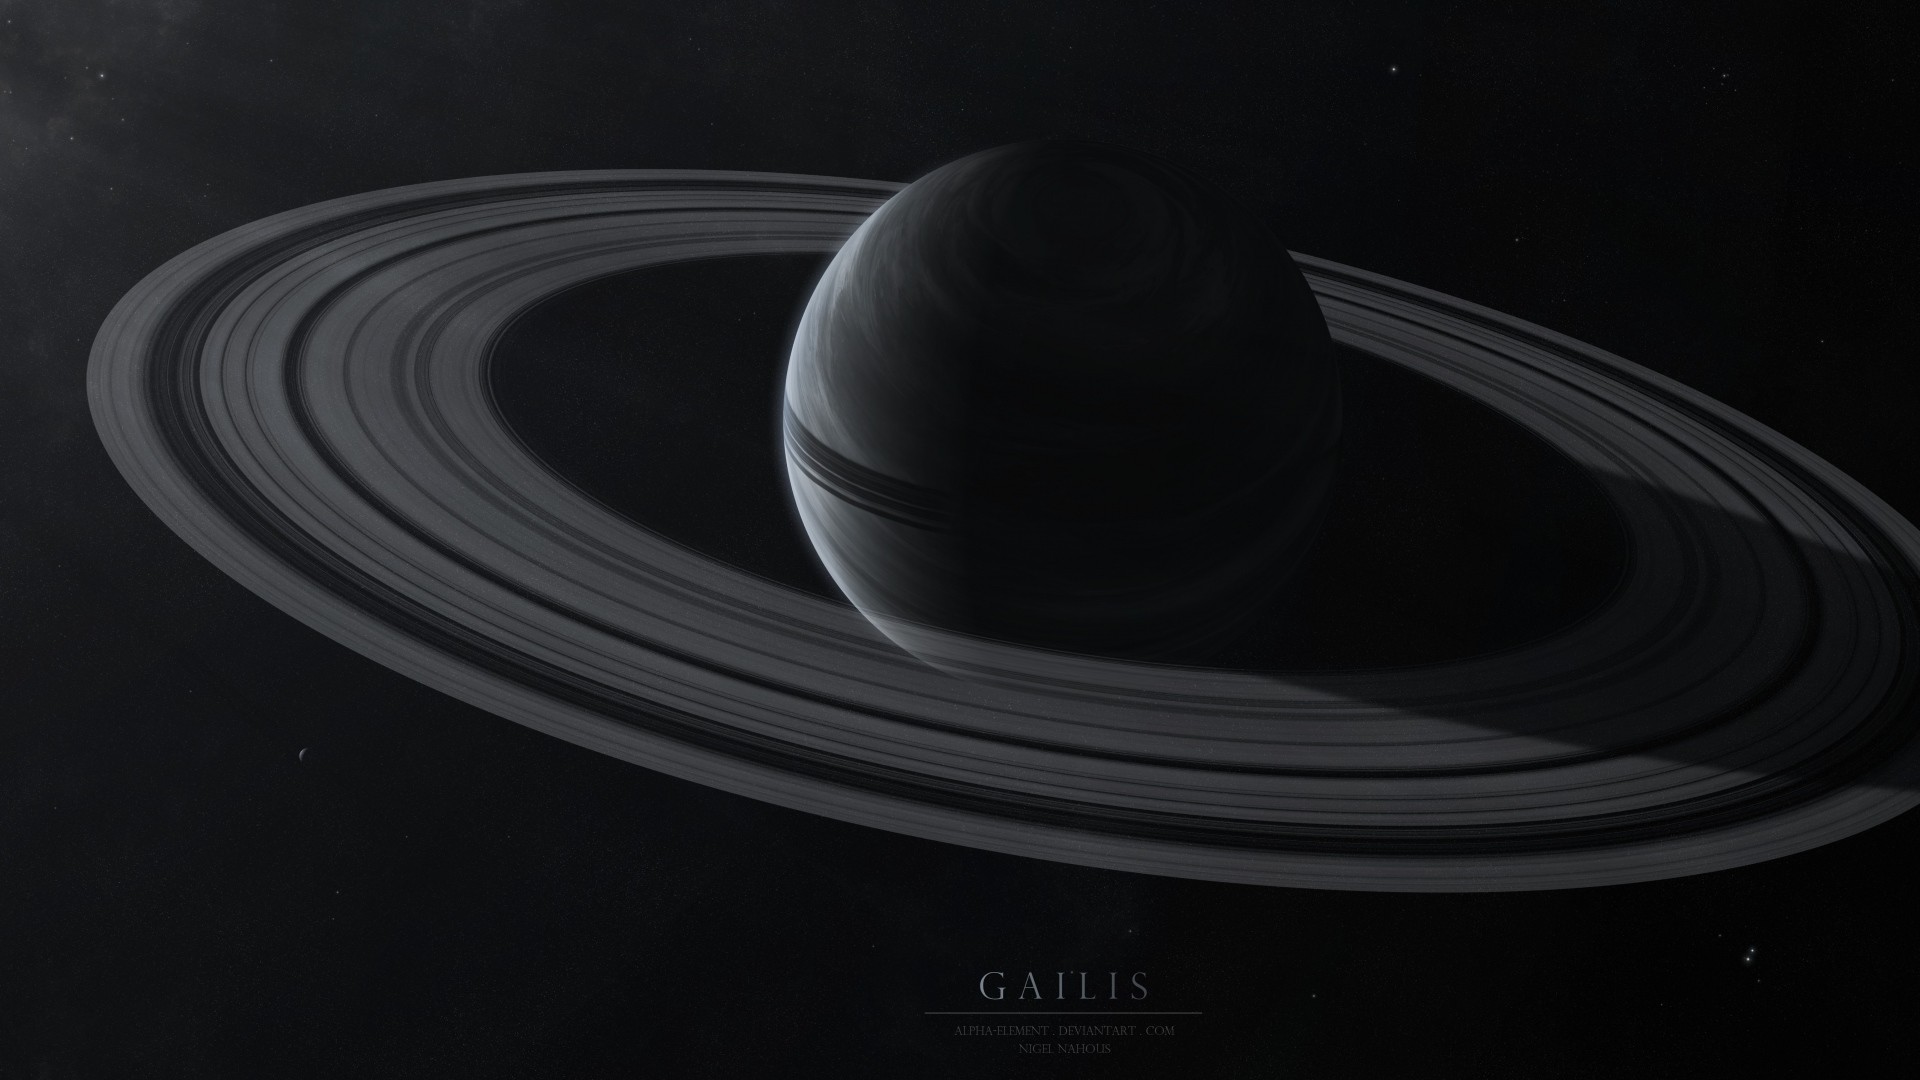 Background Full HD 1080p. Wallpaper gailis, planet, rings, stars, space